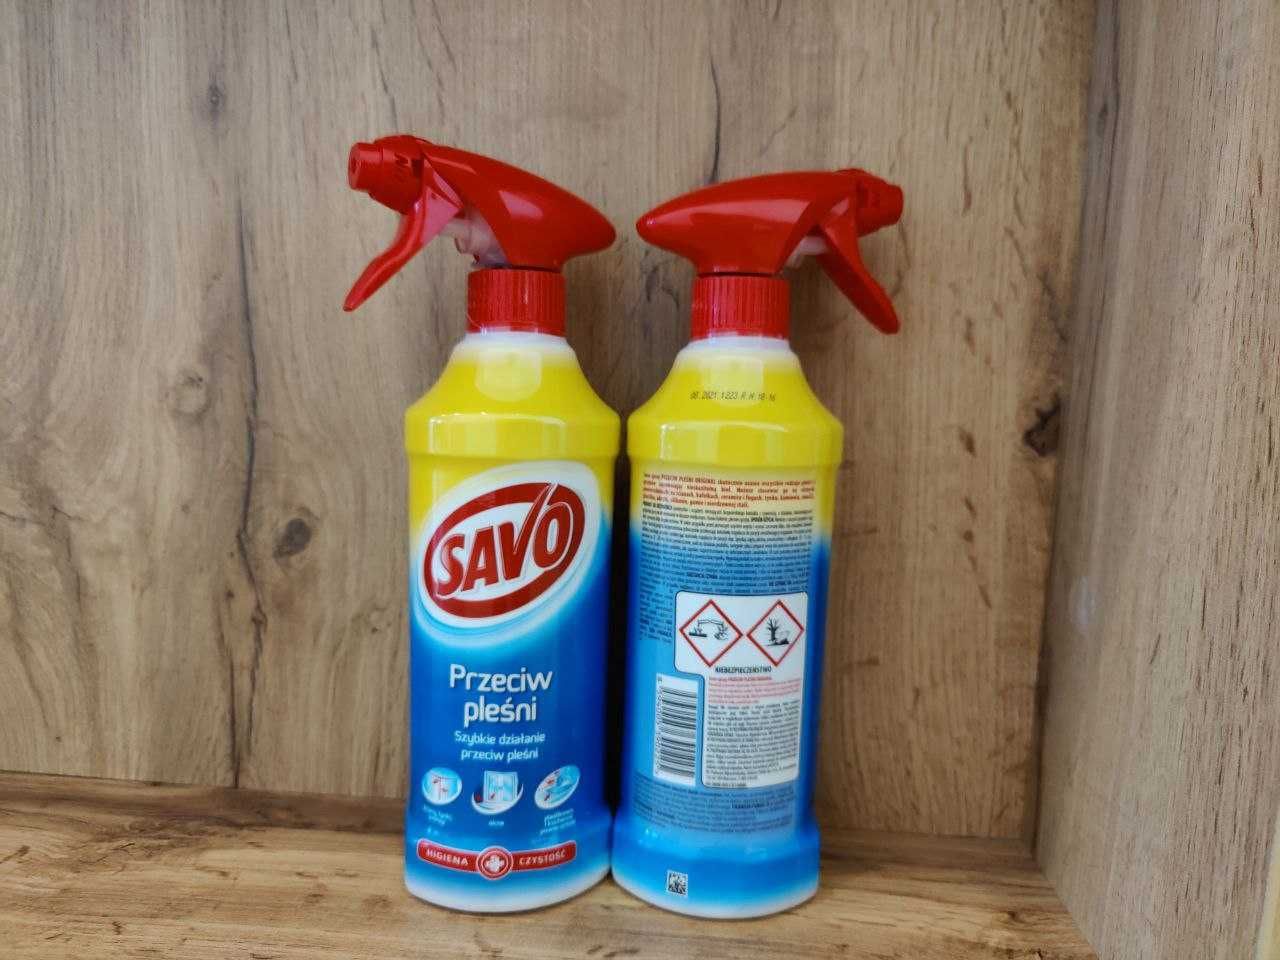 Savo - эффективное средство против плесени и грибка саво.